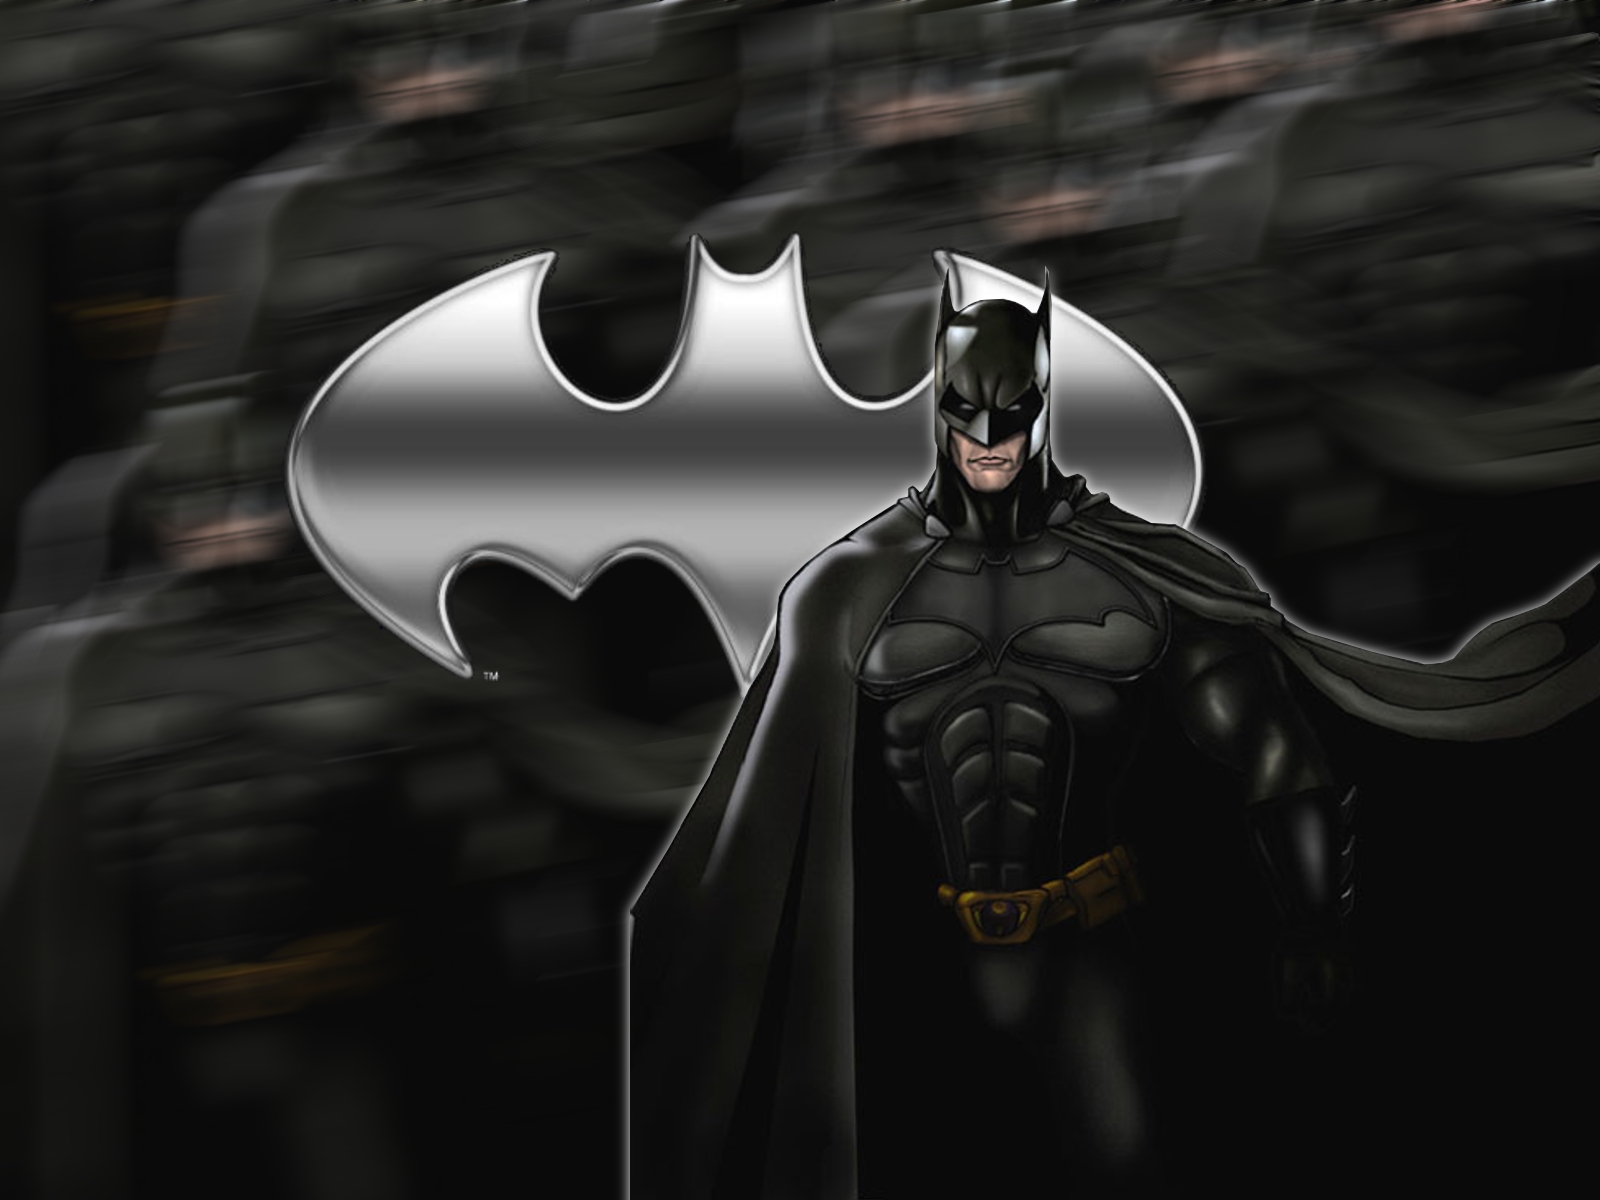 Batman 6. Темный рыцарь Бэтгерл. Batman DCEU. Свен Батман. Бэтнэнъ.